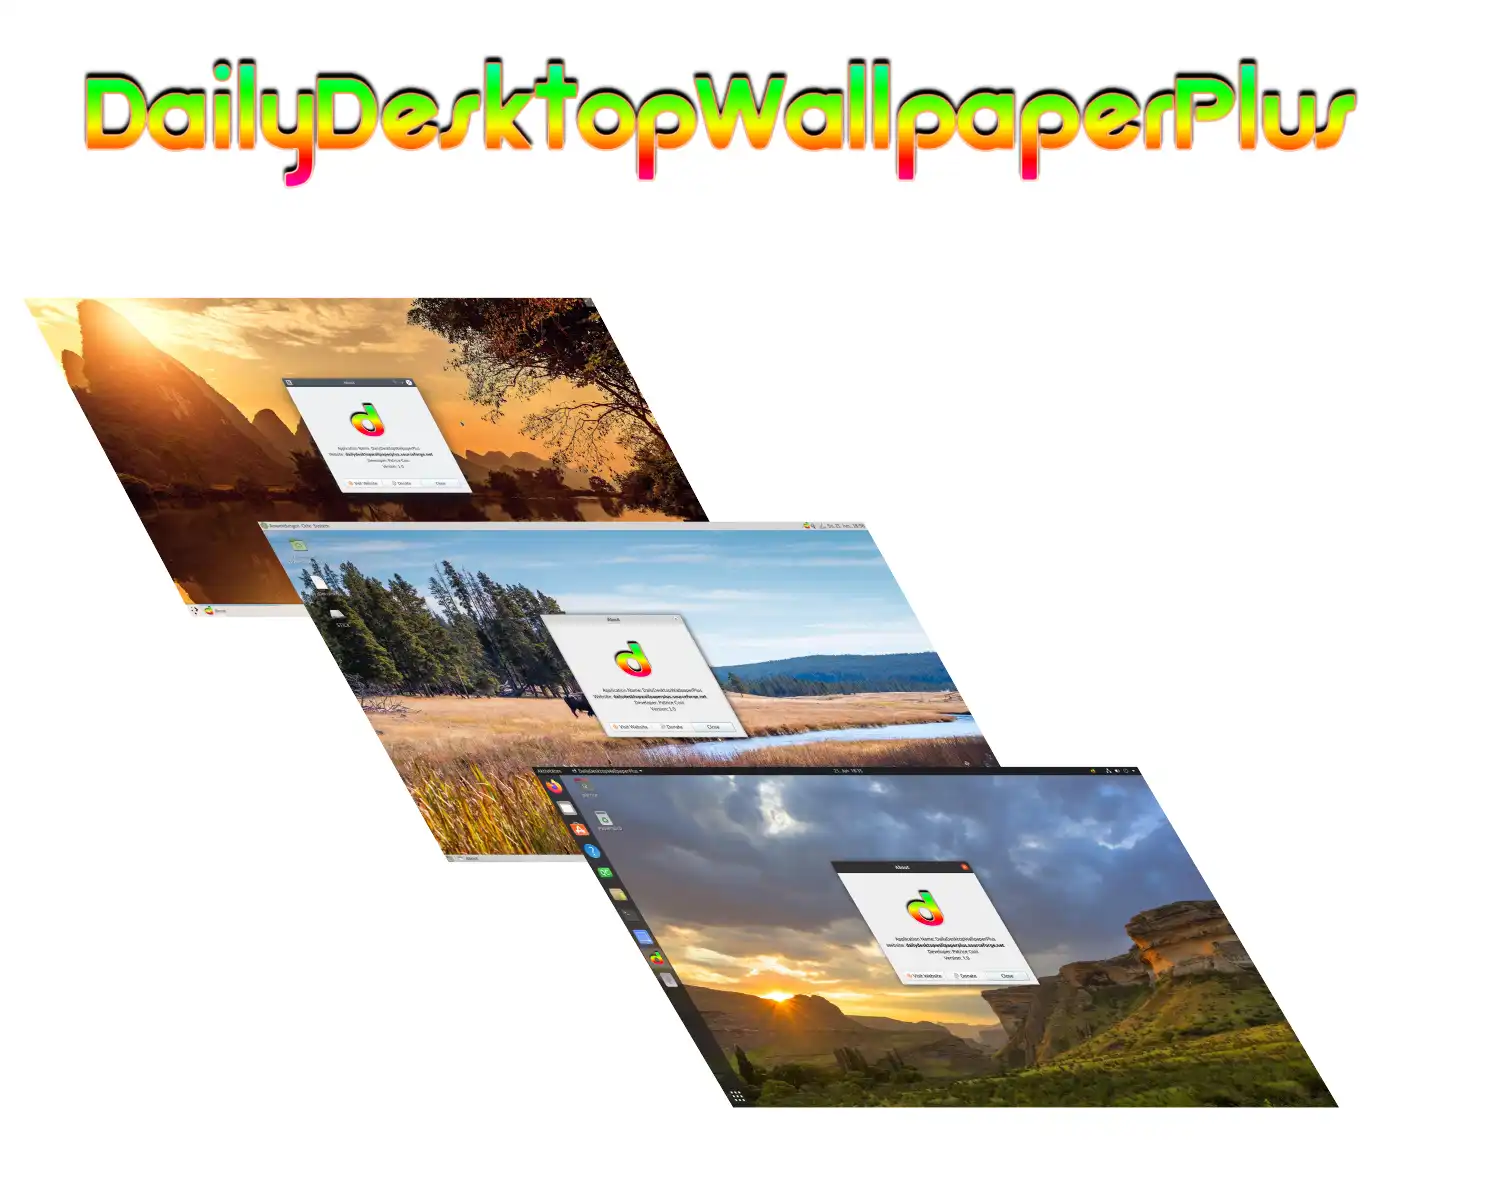 Download web tool or web app DailyDesktopWallpaperPlus